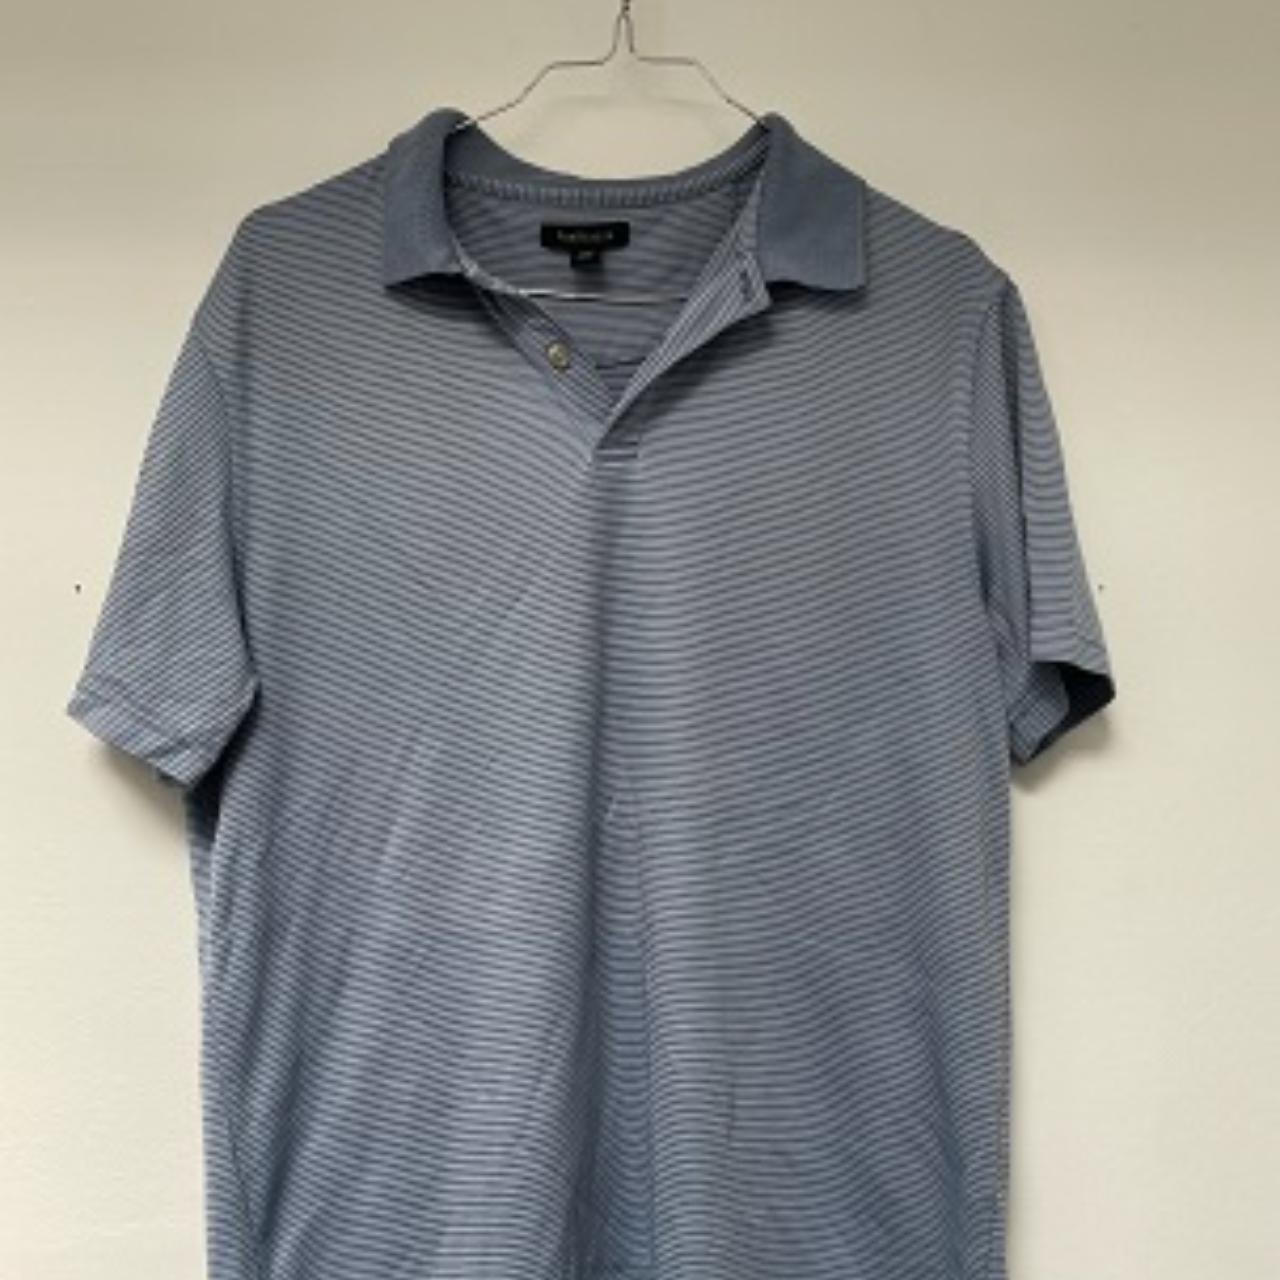 Vintage Vanheusen mens stripped grey polo shirt size S